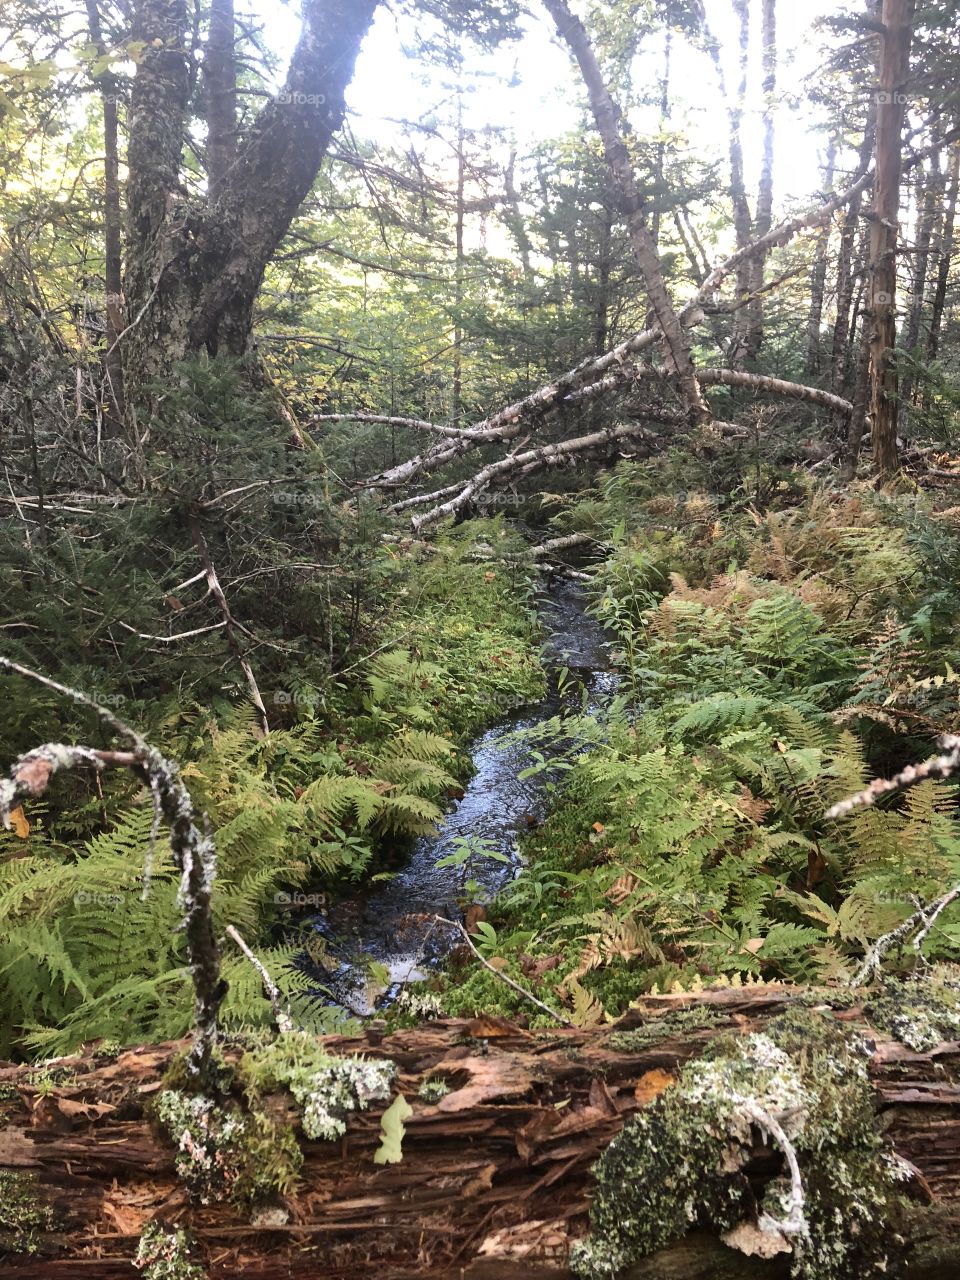 Stream through the woods